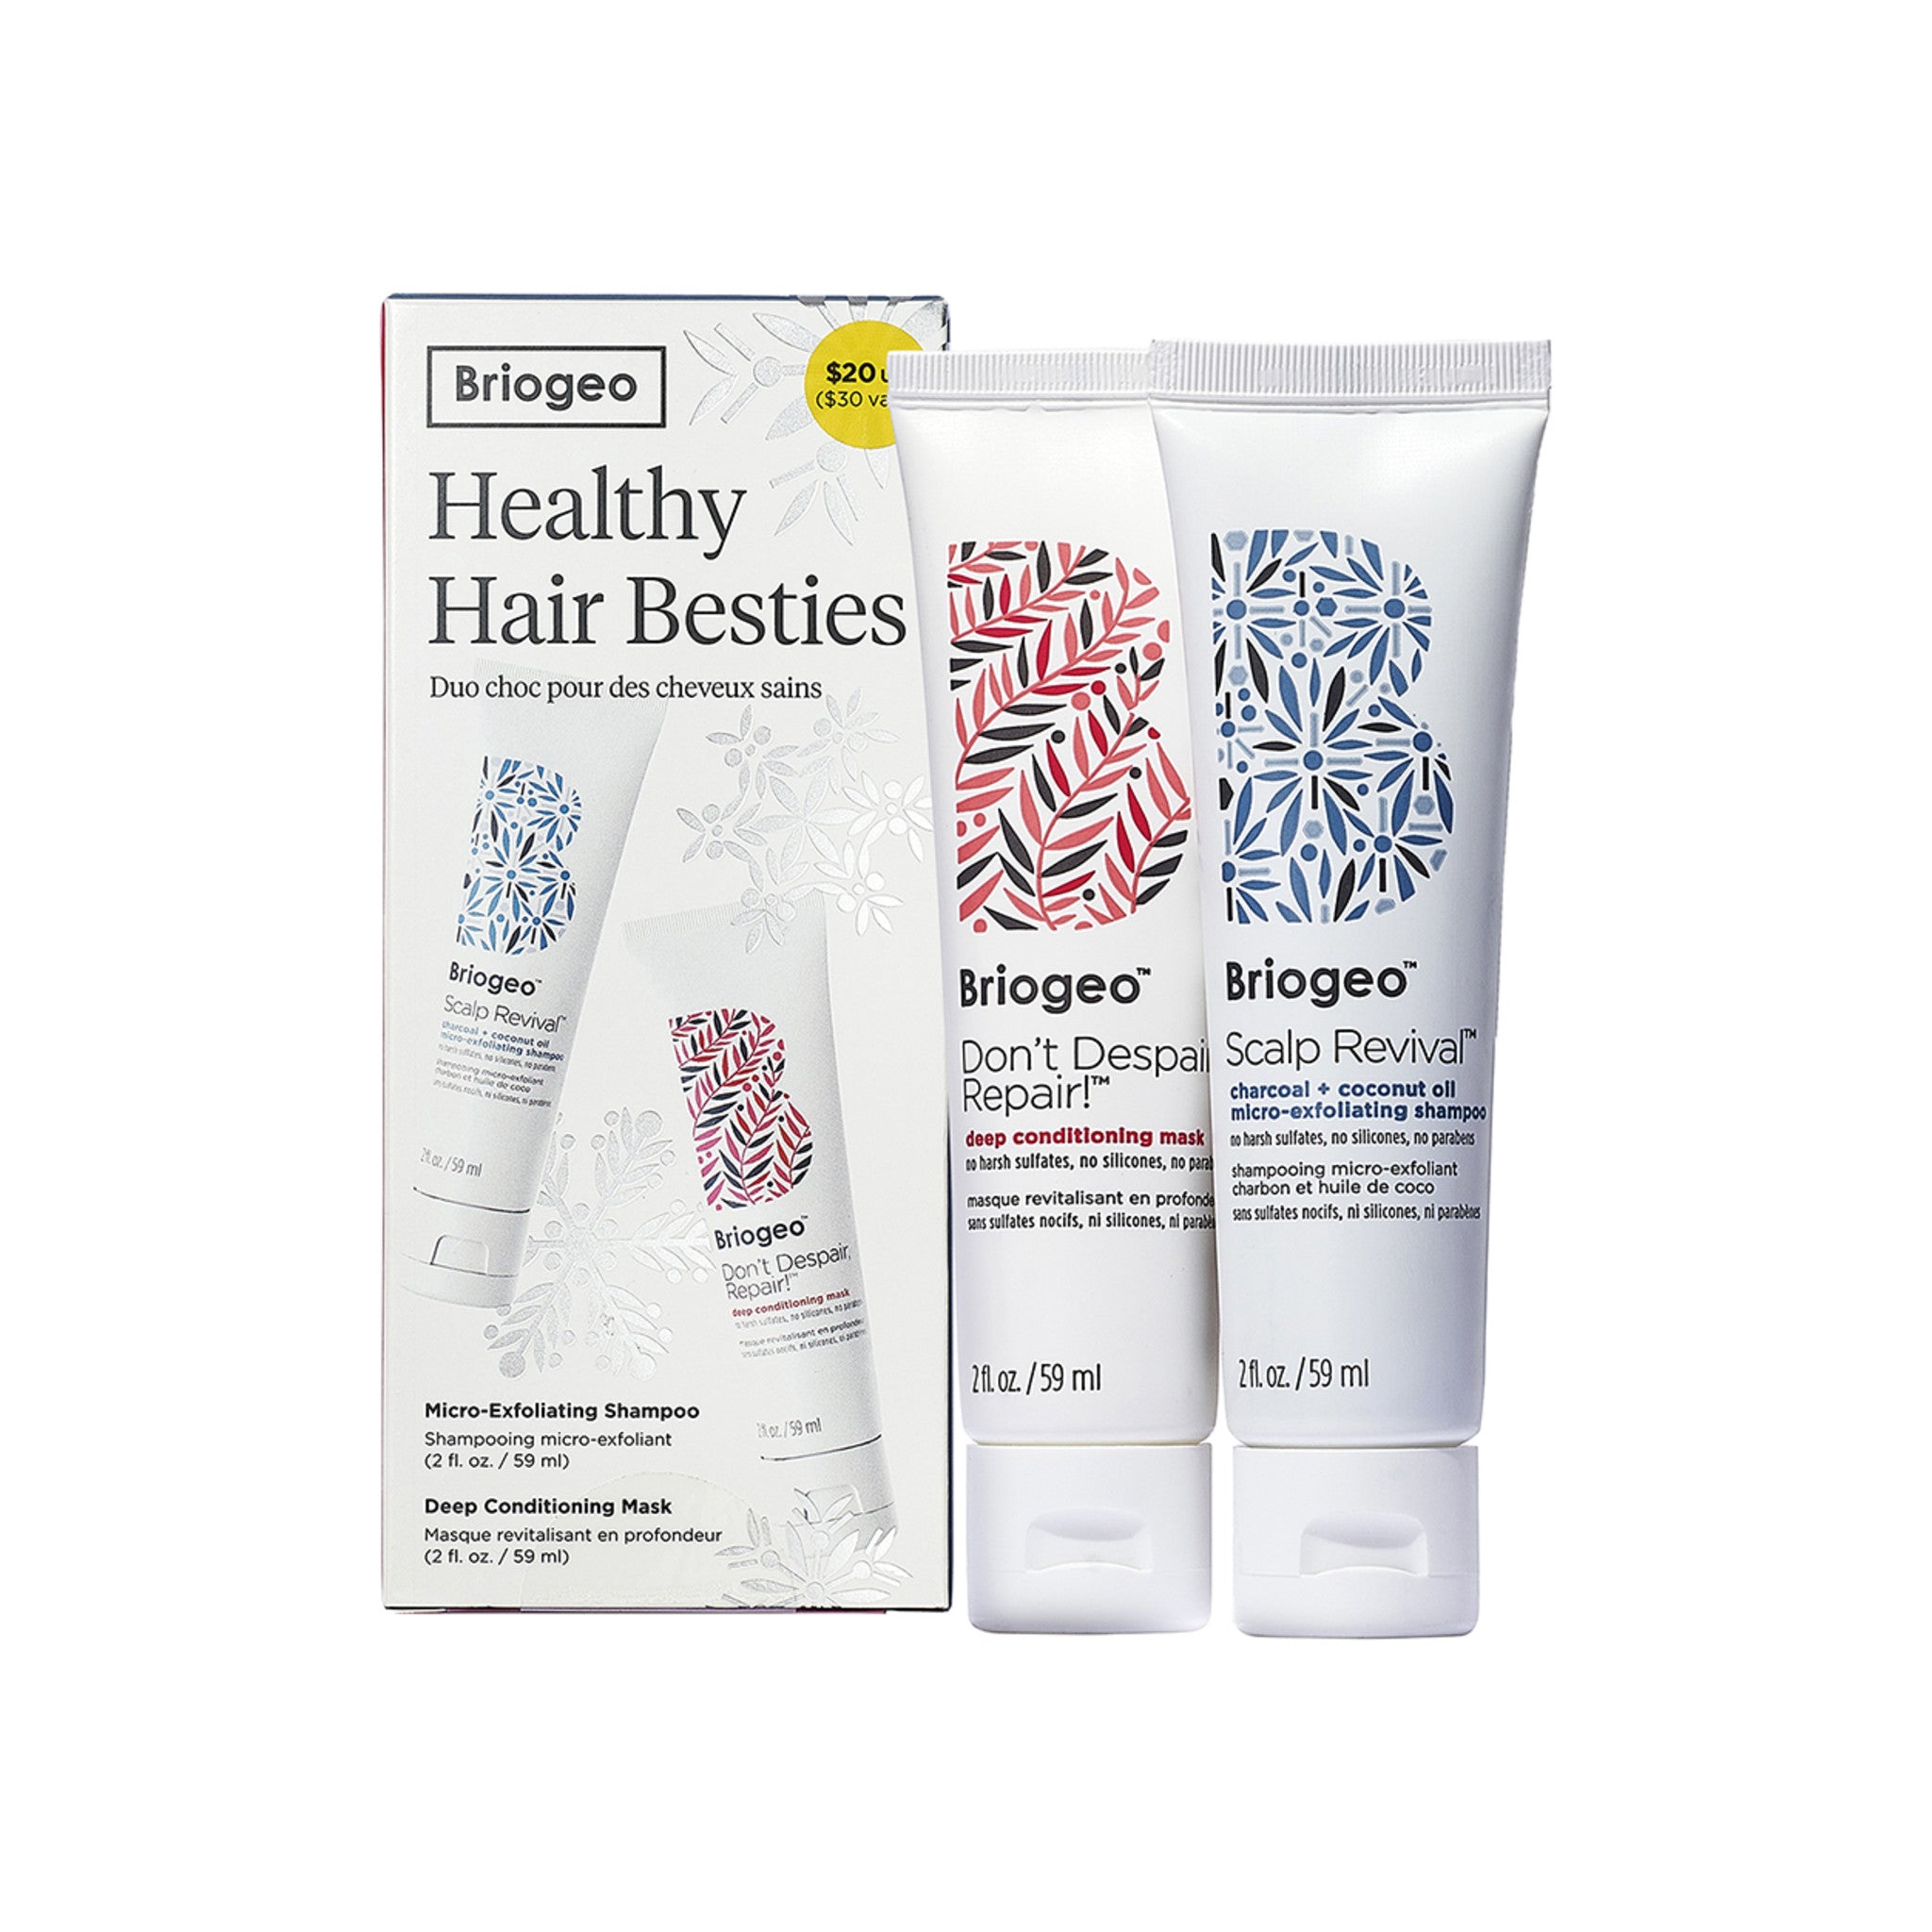 Briogeo Scalp Revival Shampoo and Don’t Despair, Repair! Hair Mask Travel Gift Set (Limited Edition) main image.